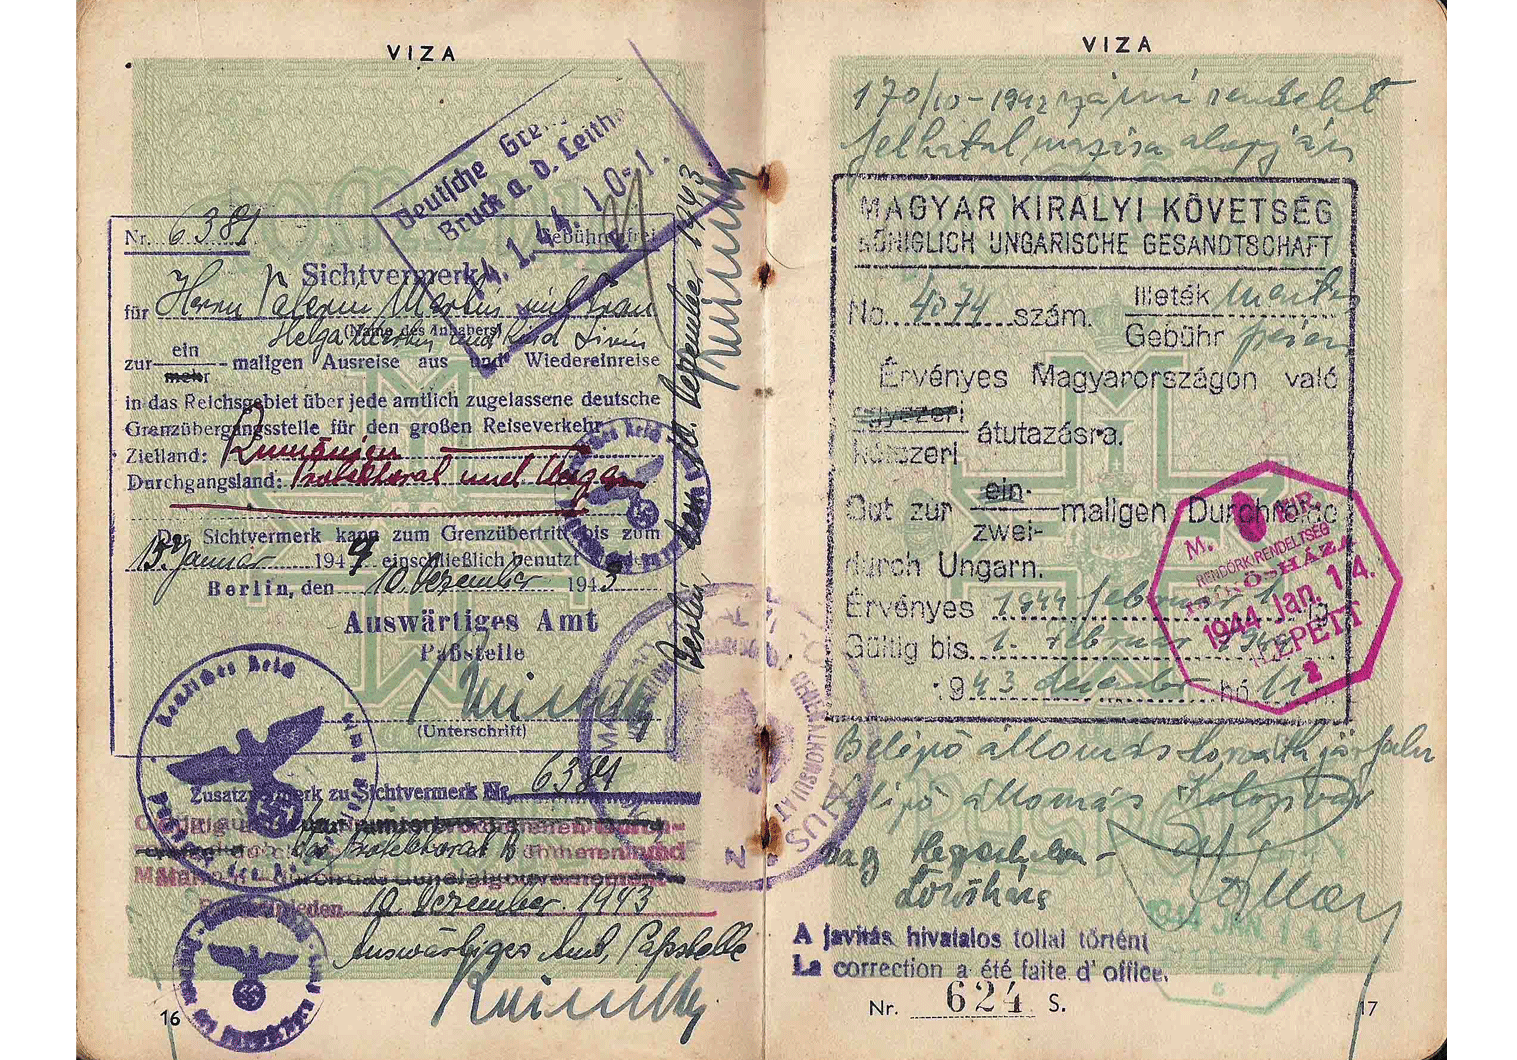 WW2 German visa